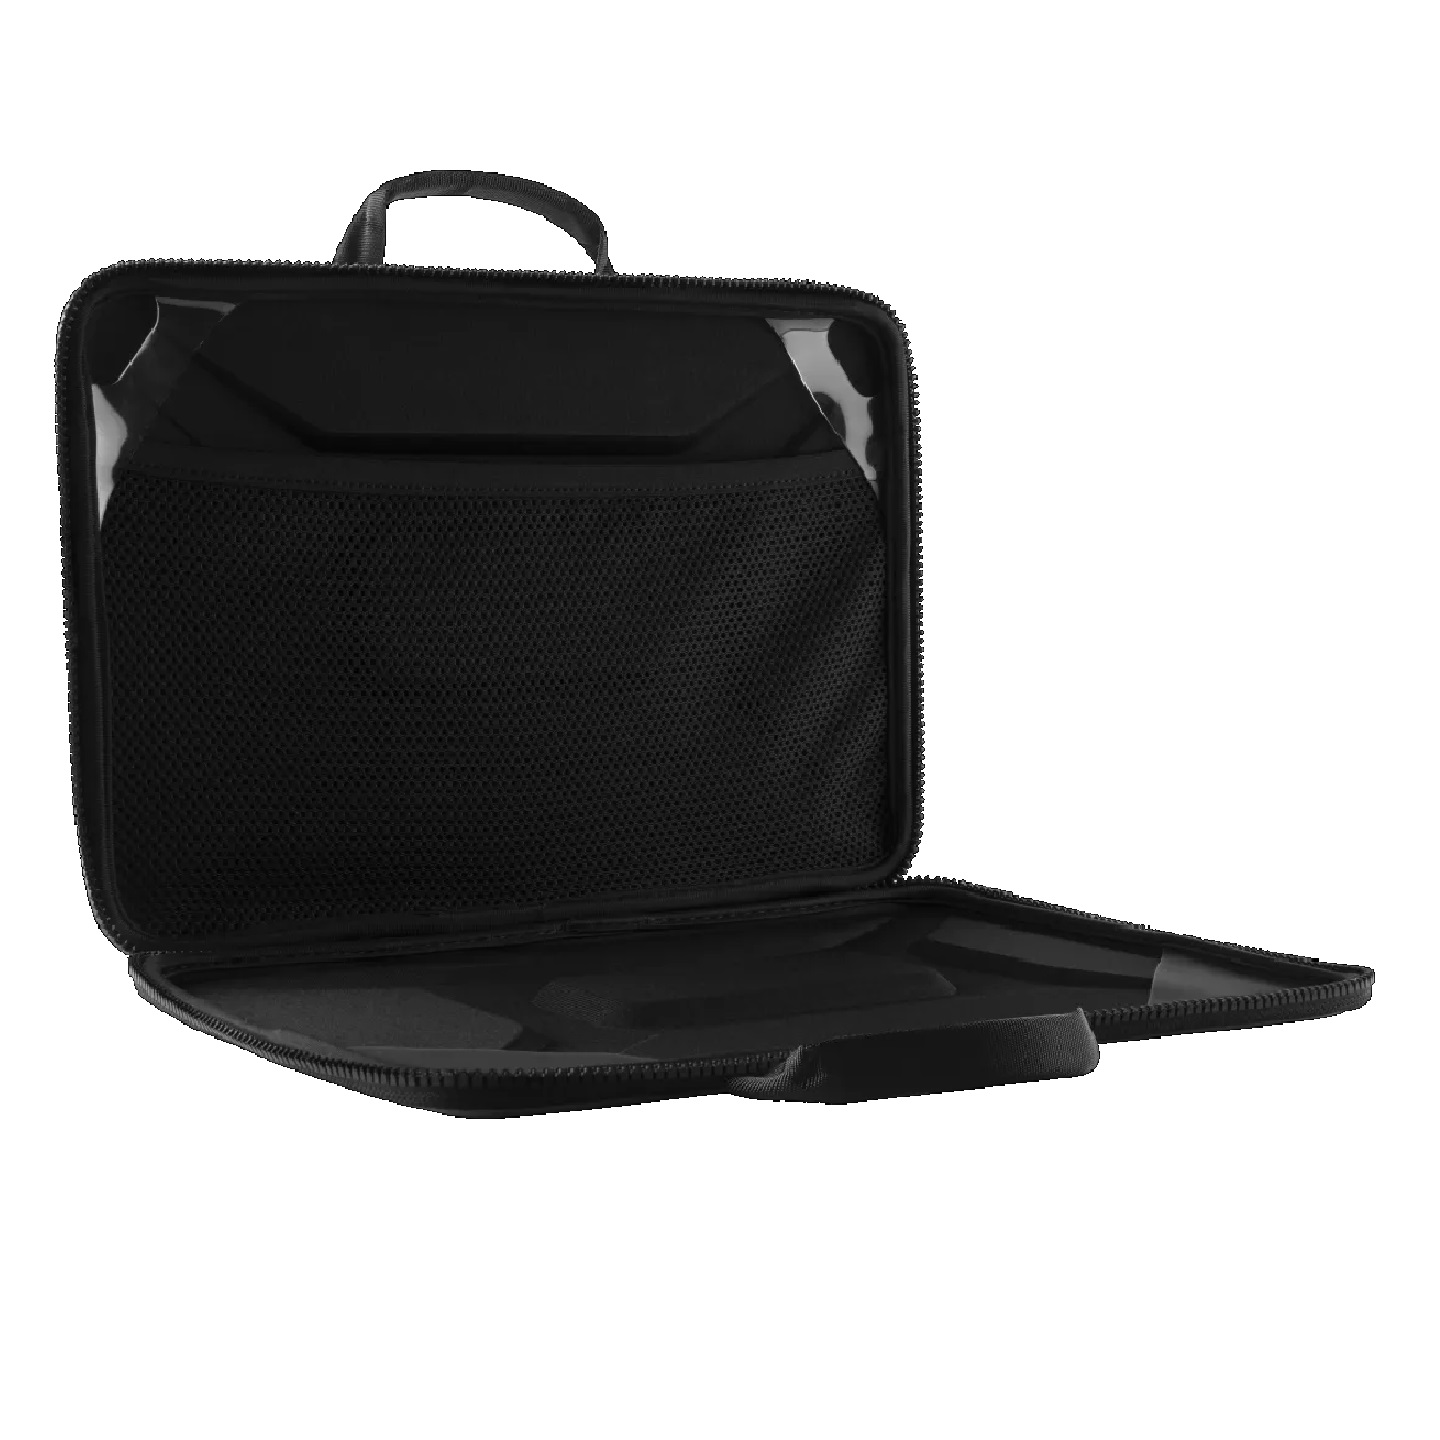 UAG Medium Sleeve with Handle Fits 13″ Laptops/Tablets – Black (982800114040), DROP+ Military Standard, Tactical Grip, Wear-Resistant,Mesh Pocket